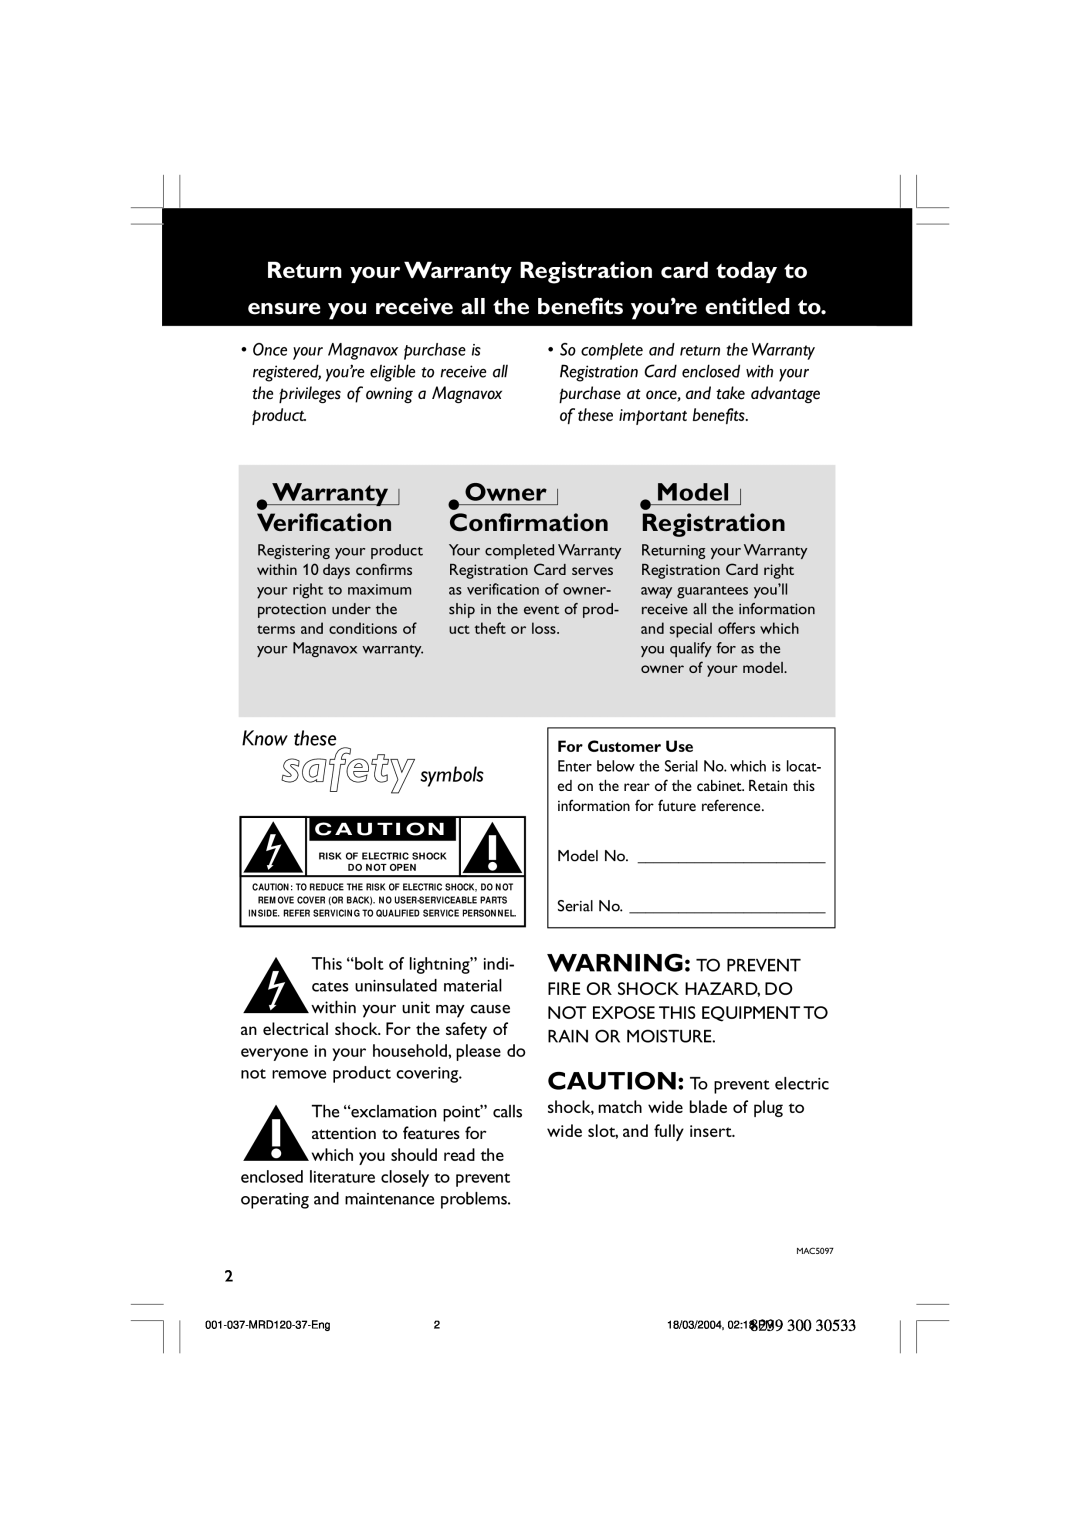 Magnavox MRD120 warranty Warranty Verification, Owner Confirmation, Model Registration, Know these safety symbols 